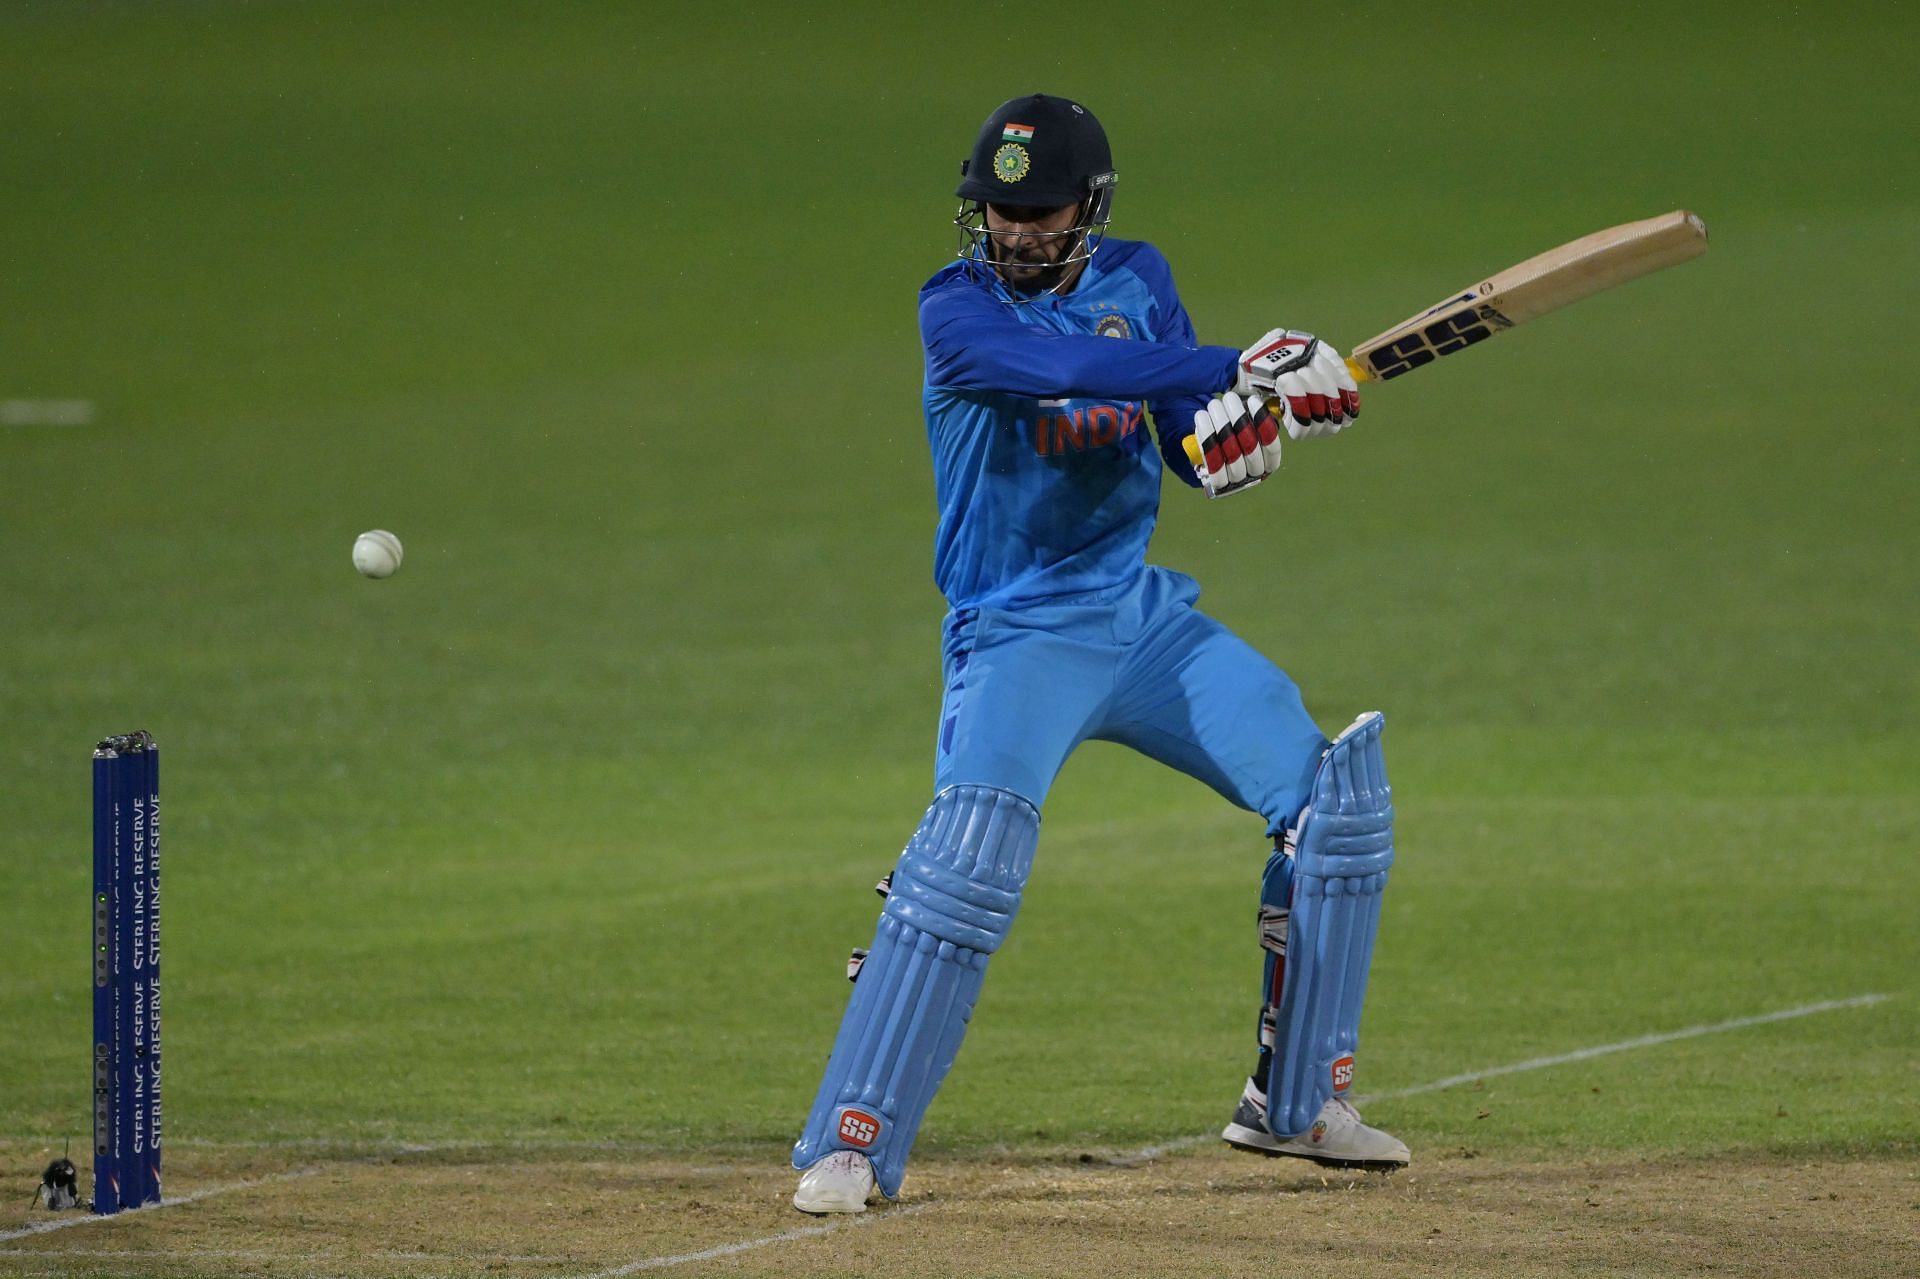 Deepak Hooda has a T20I century, but his recent displays could hurt his case